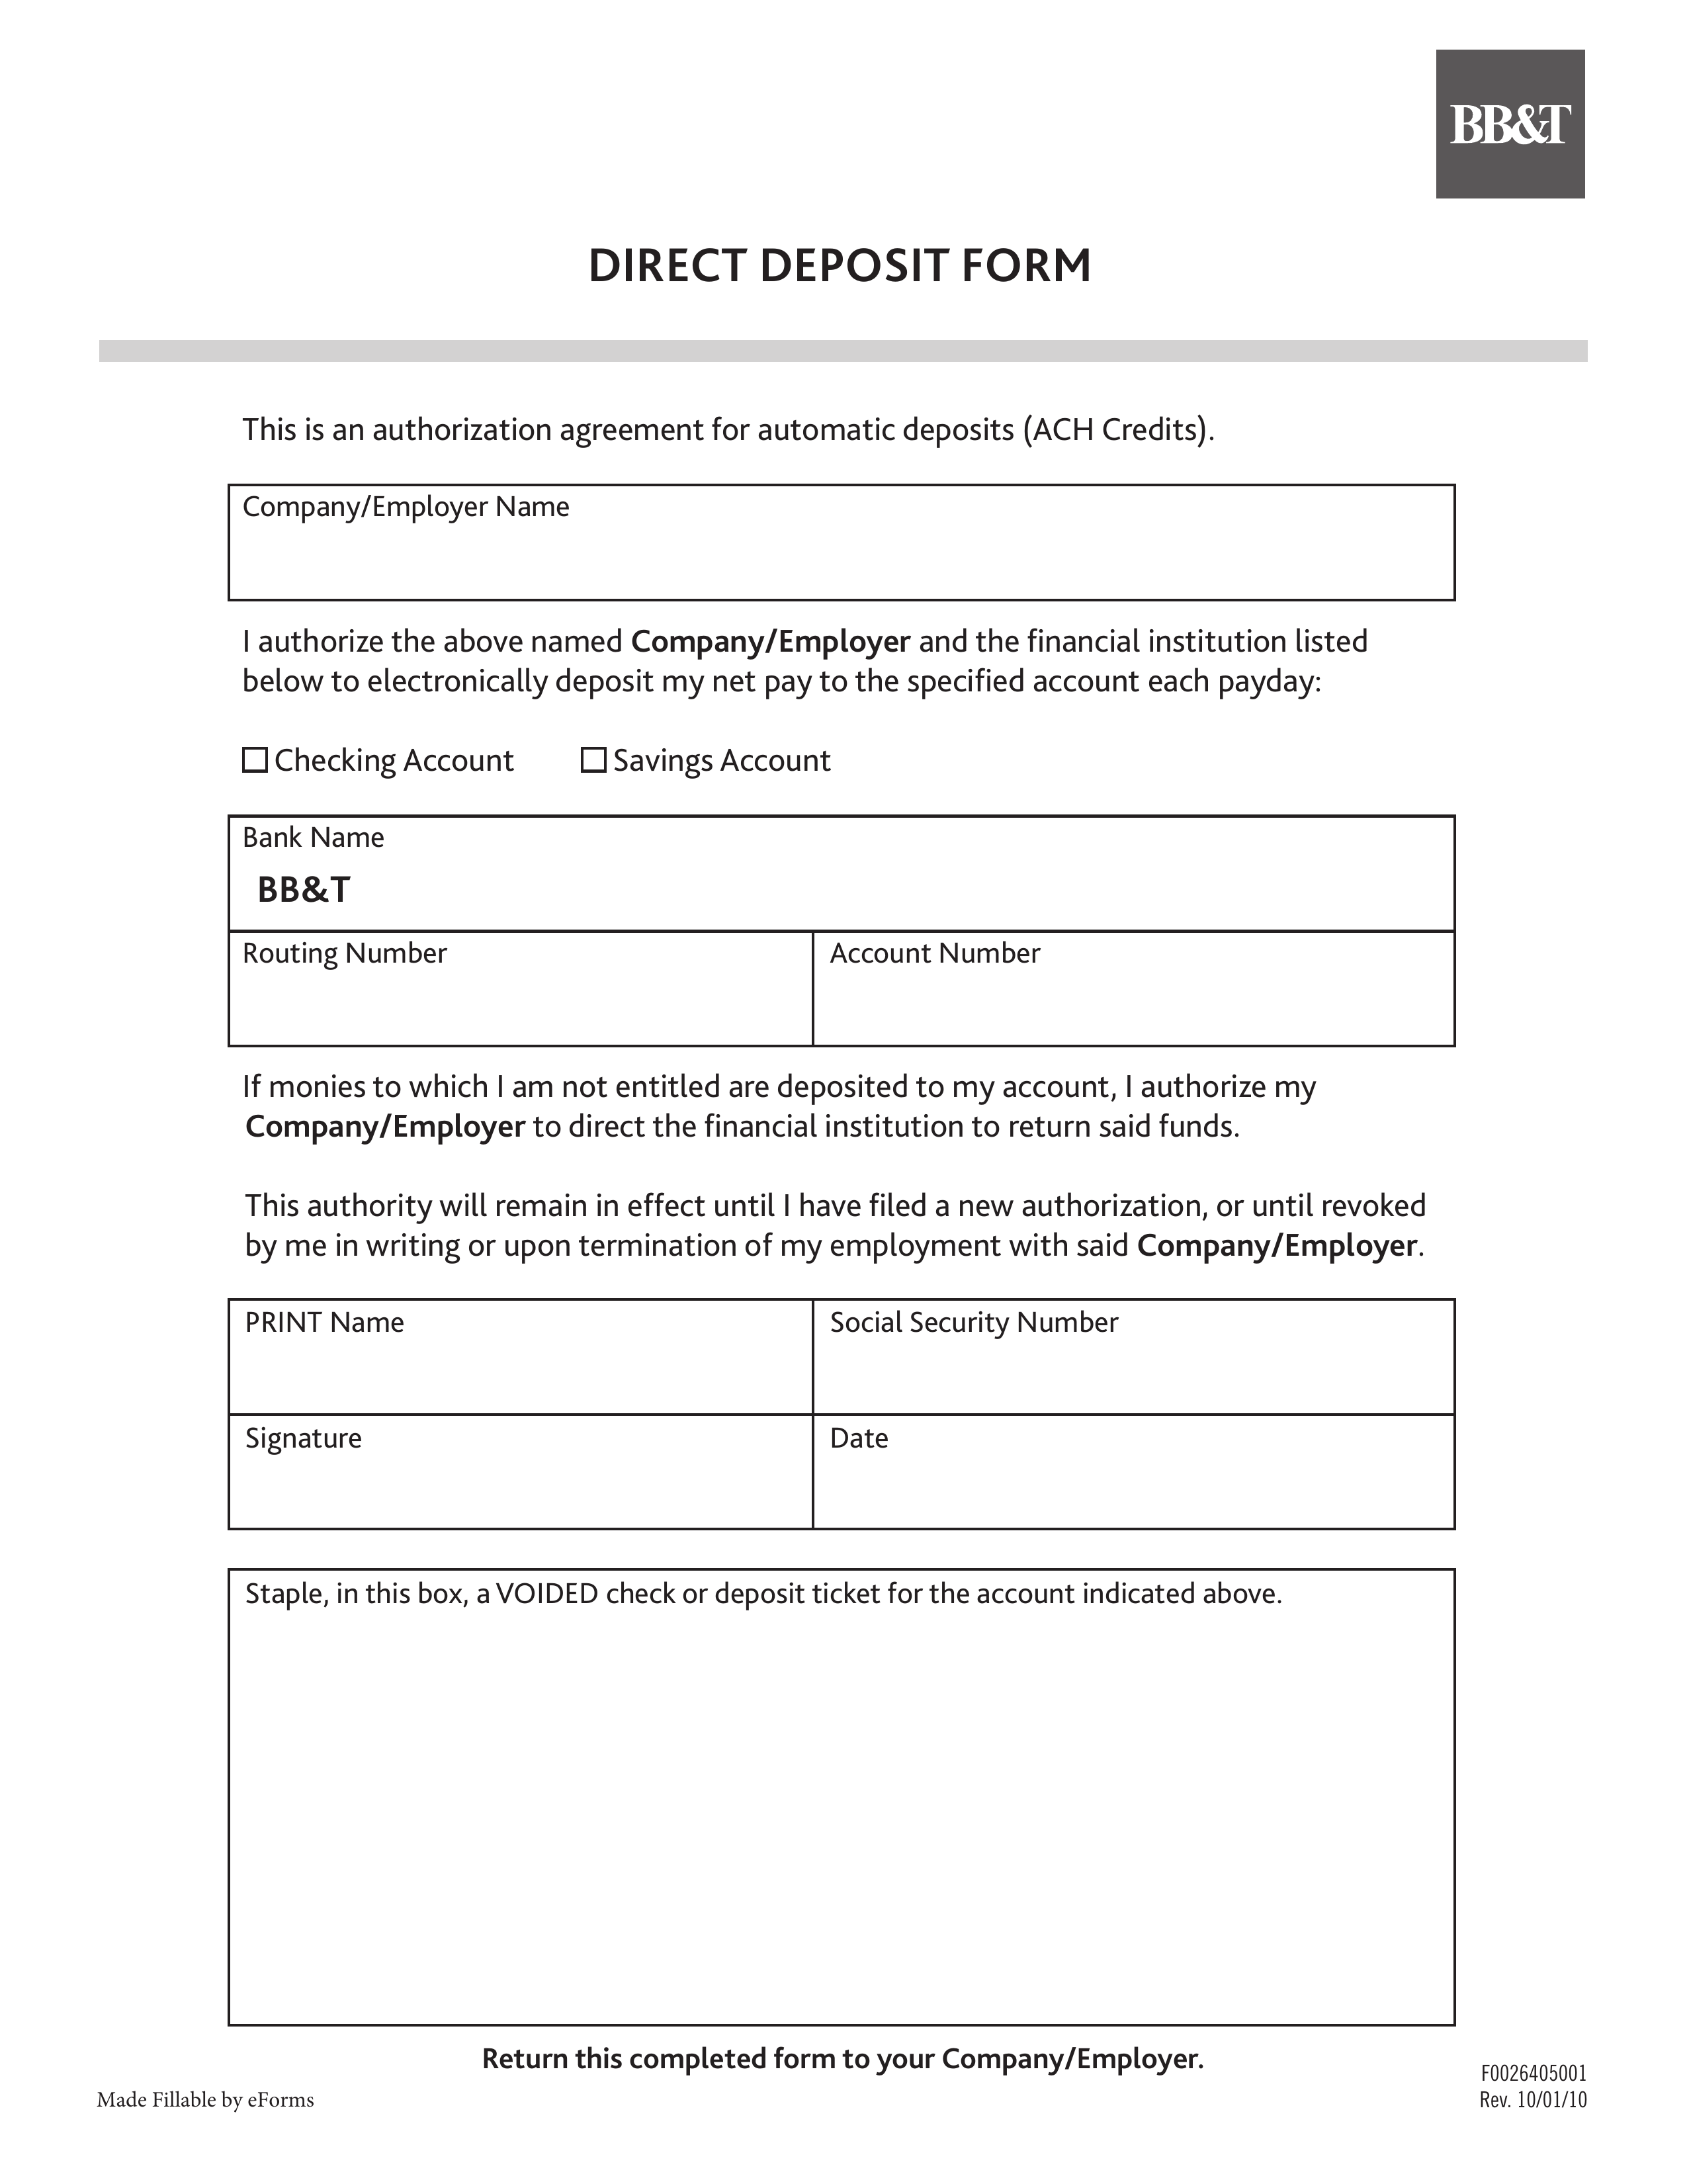 Free BB&T Direct Deposit Authorization Form - PDF – eForms Regarding Ach Deposit Authorization Form Template For Ach Deposit Authorization Form Template